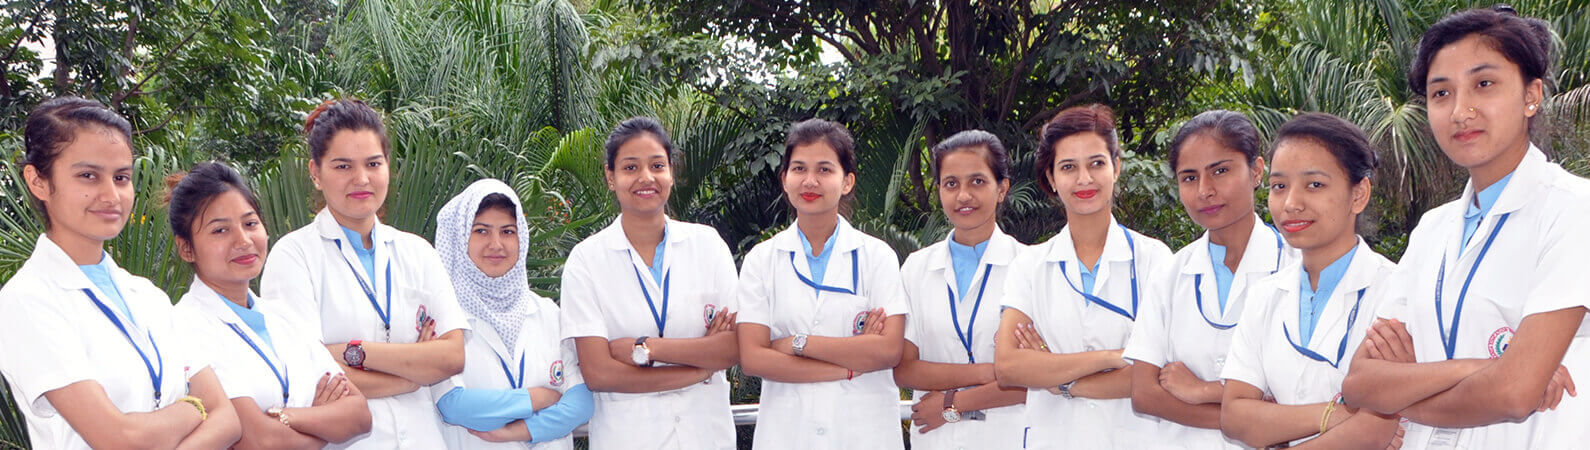 Top Nursing Colleges in Bangalore - PBBSc